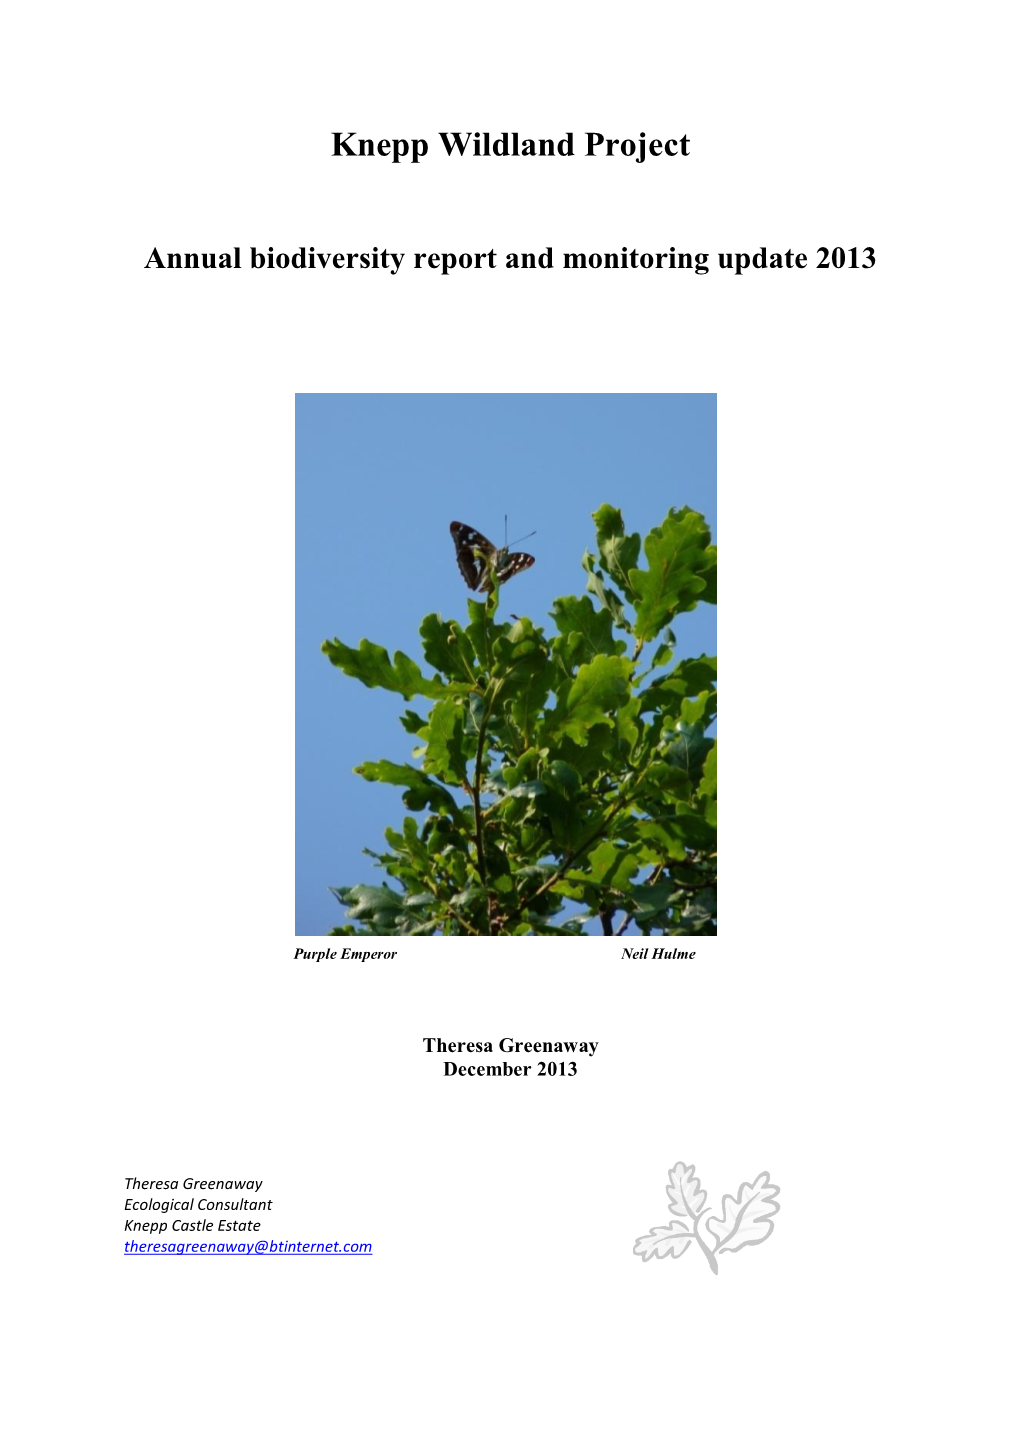 Knepp Wildland Project Annual Biodiversity